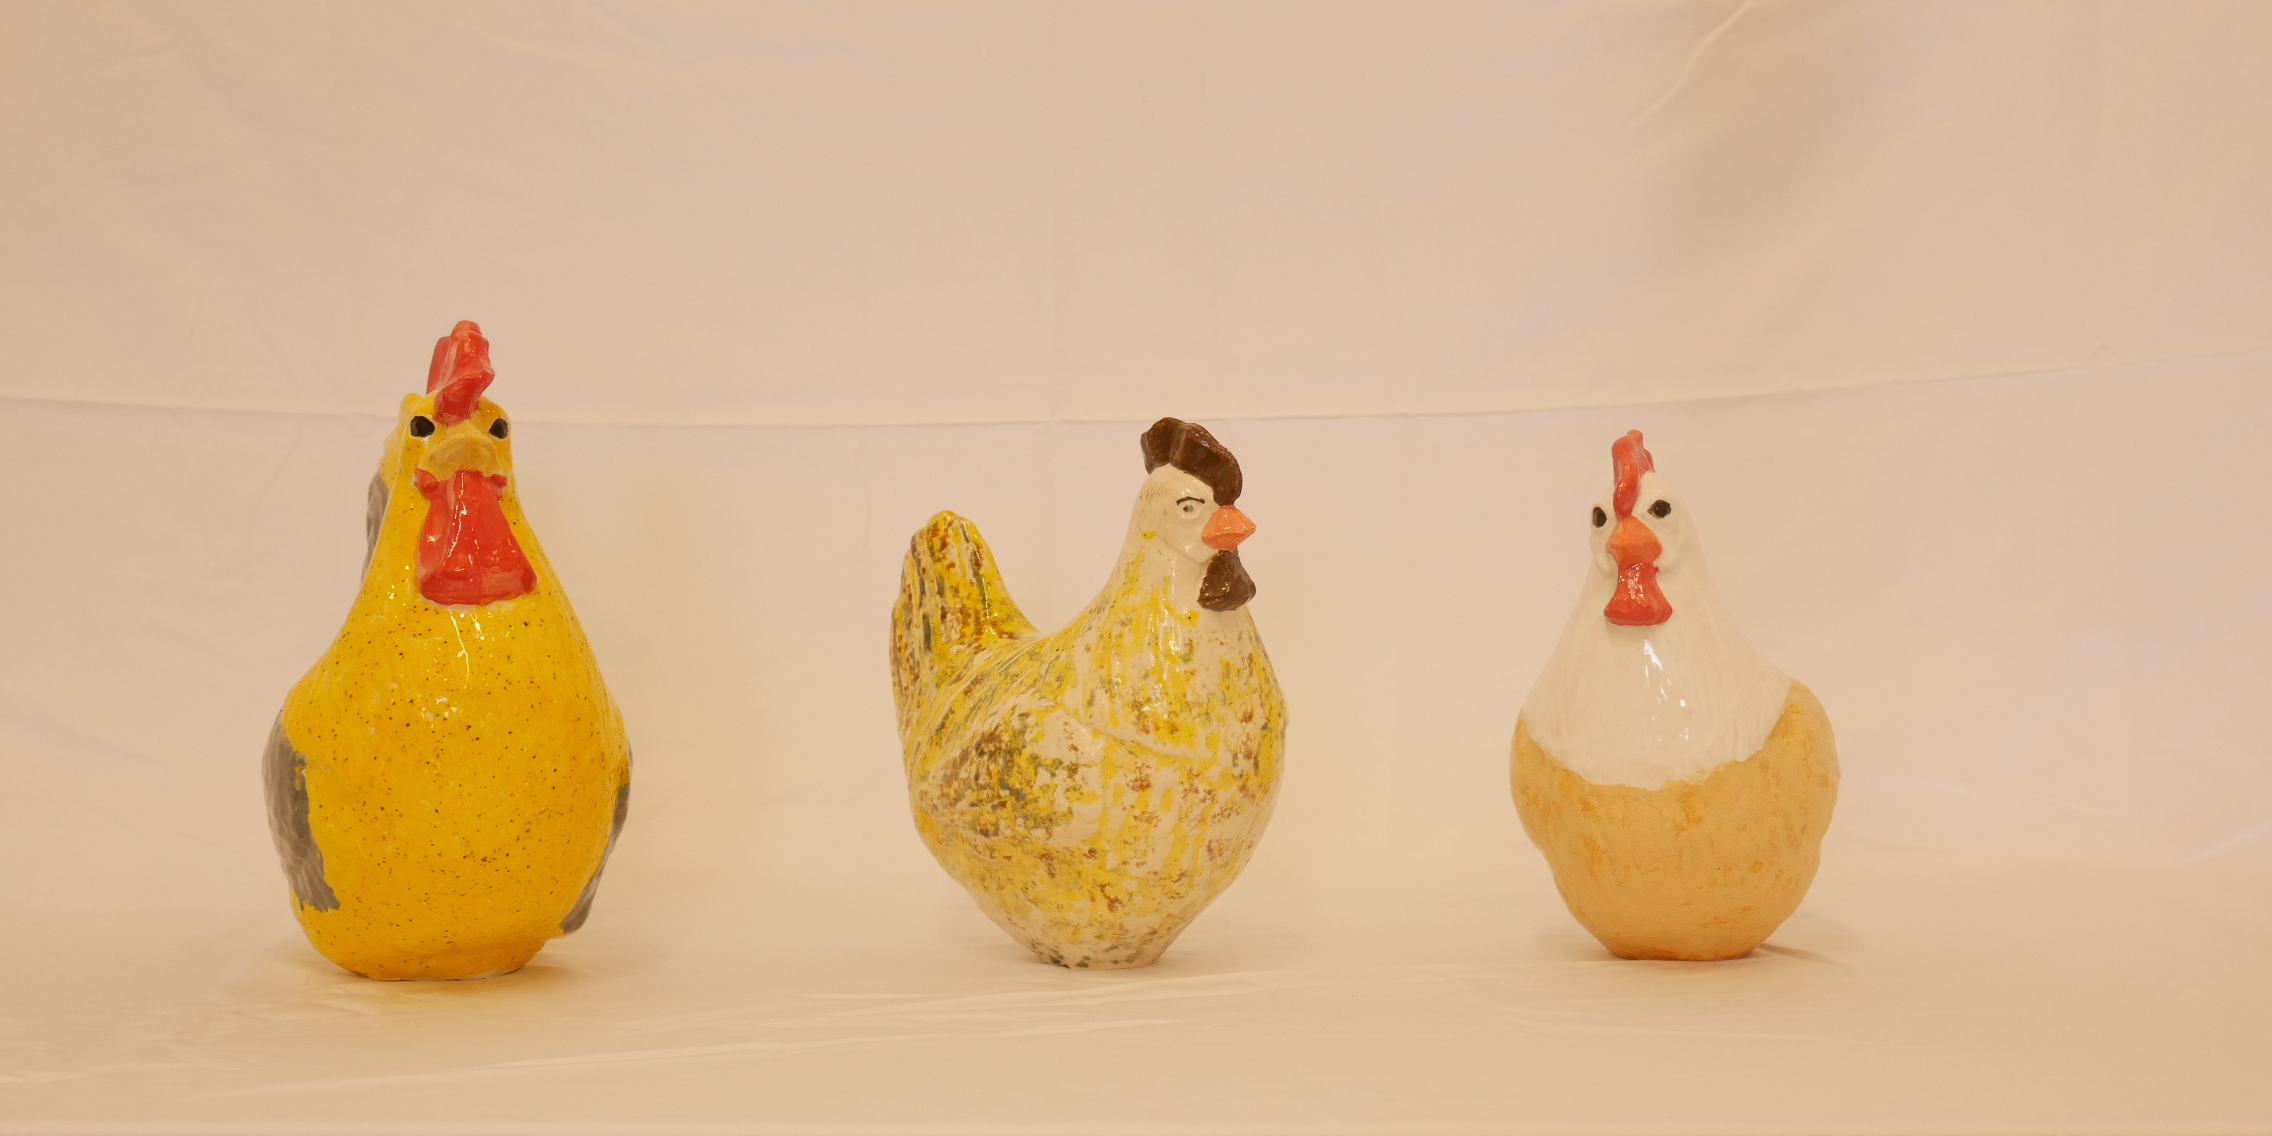 Keramikfiguren - Produkte des Arbeitstrainings Kreativ der JVA Cottbus-Dissenchen